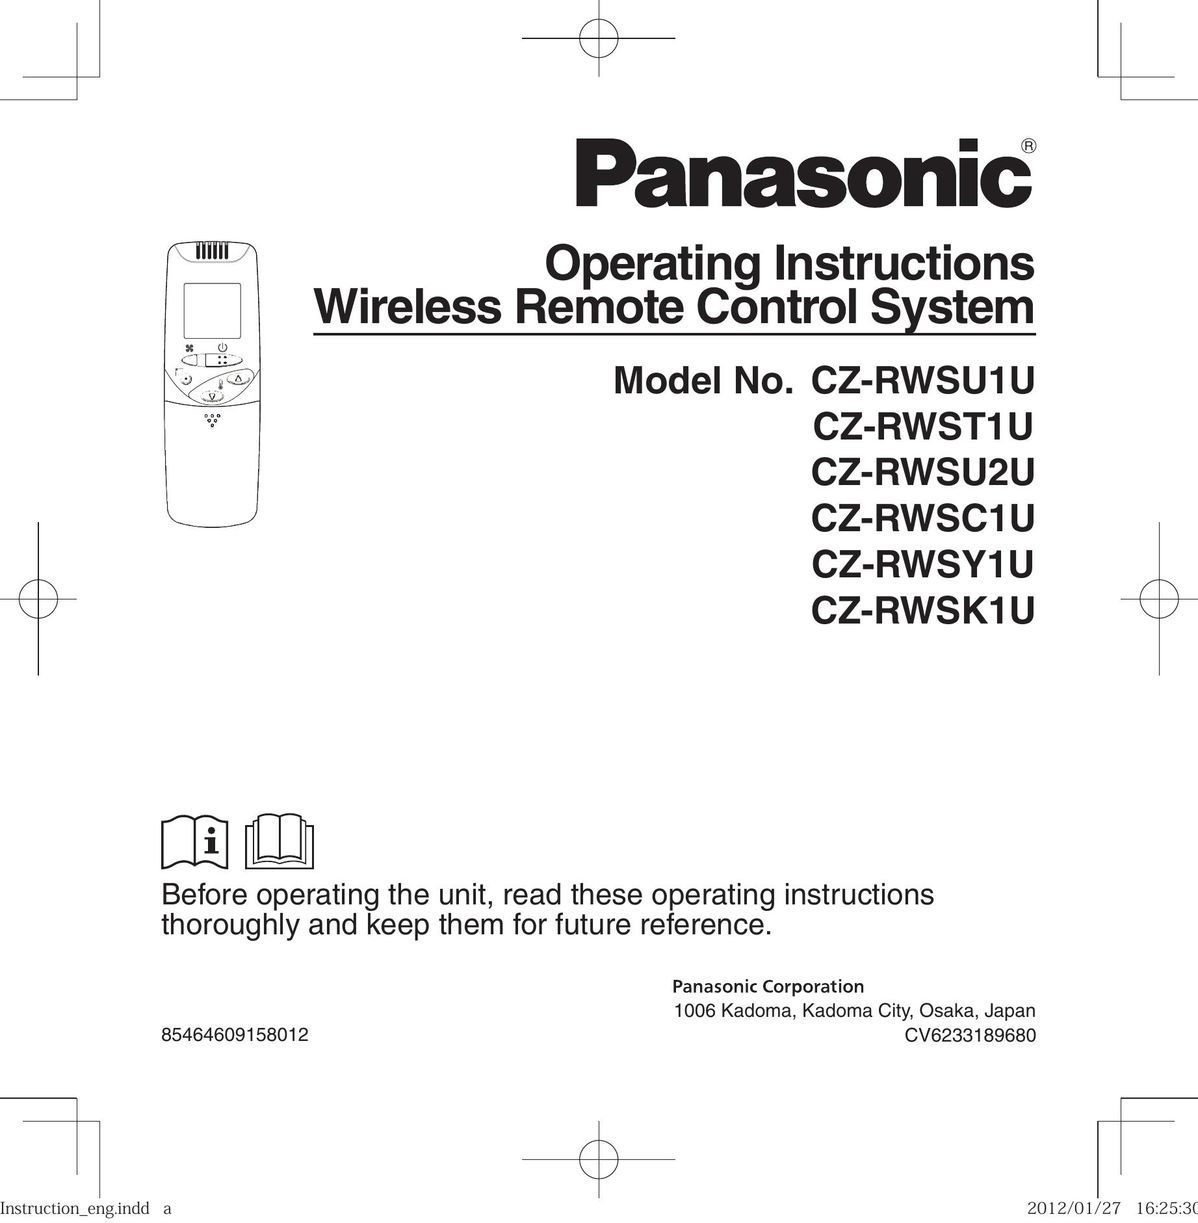 Panasonic CZ-RWSY1U Universal Remote User Manual